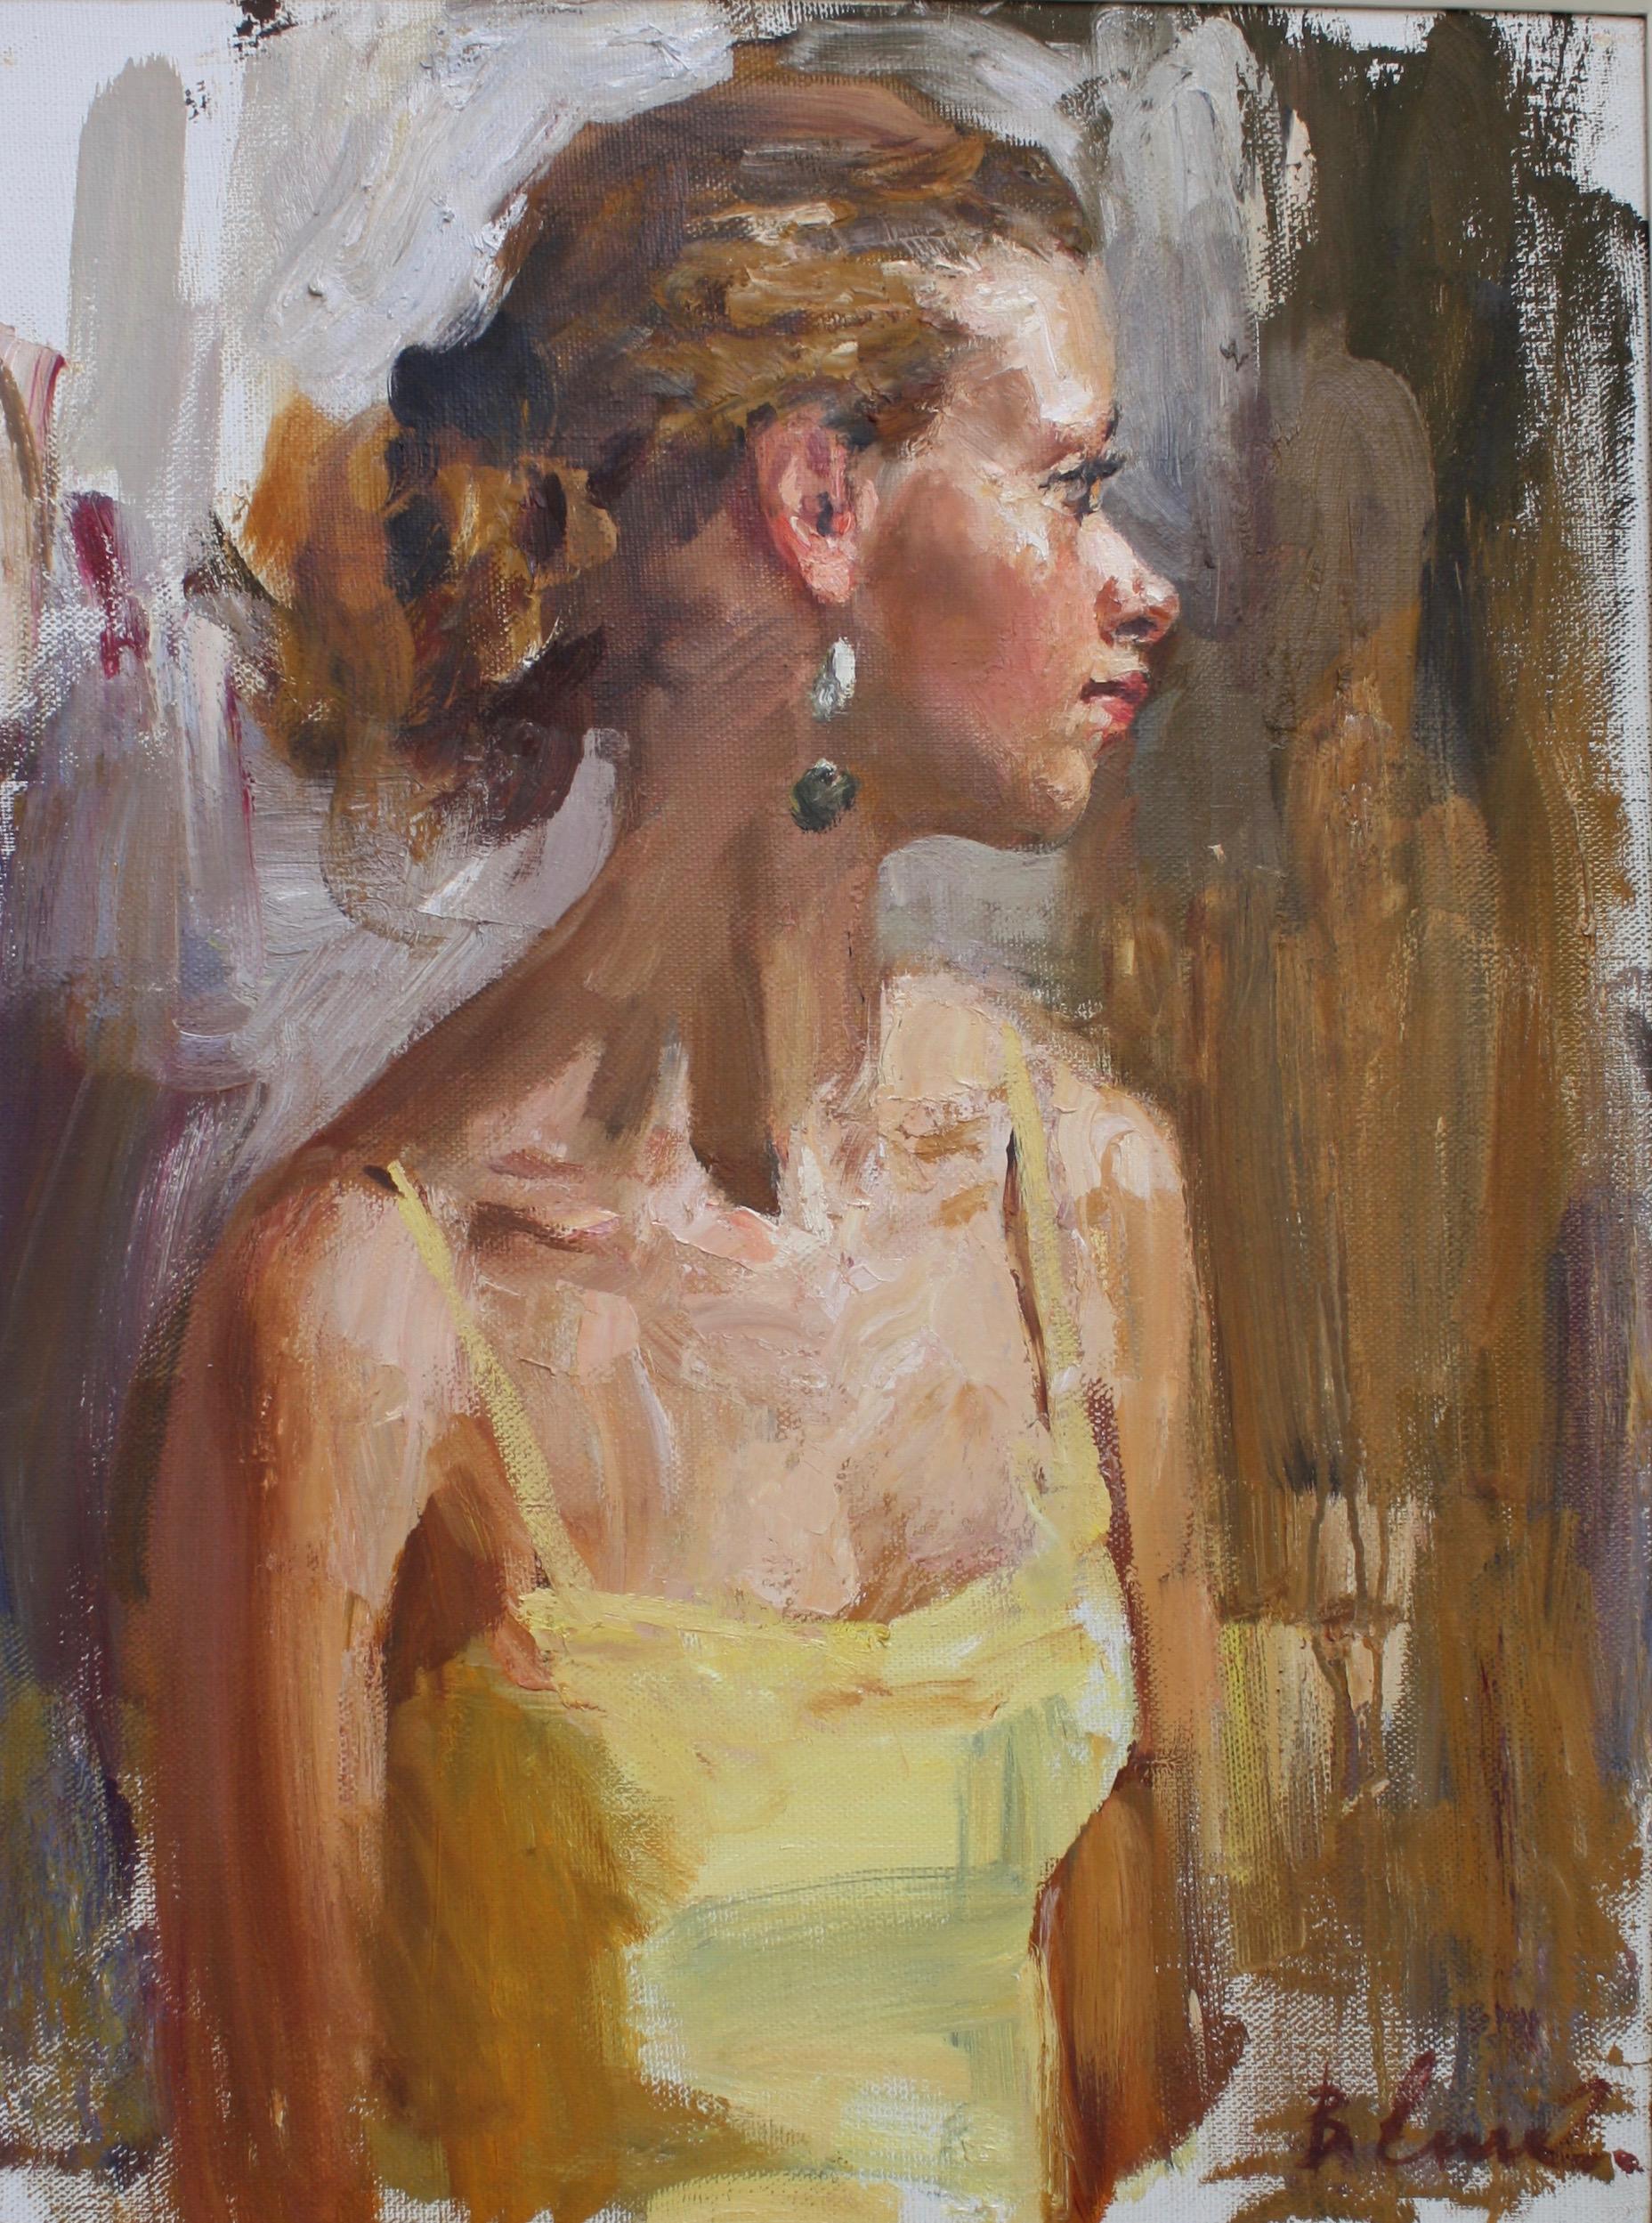 PORTRAIT OF A GIRL IN A YELLOW DRESS..Vladimir Ezhakov contemporary Russian 